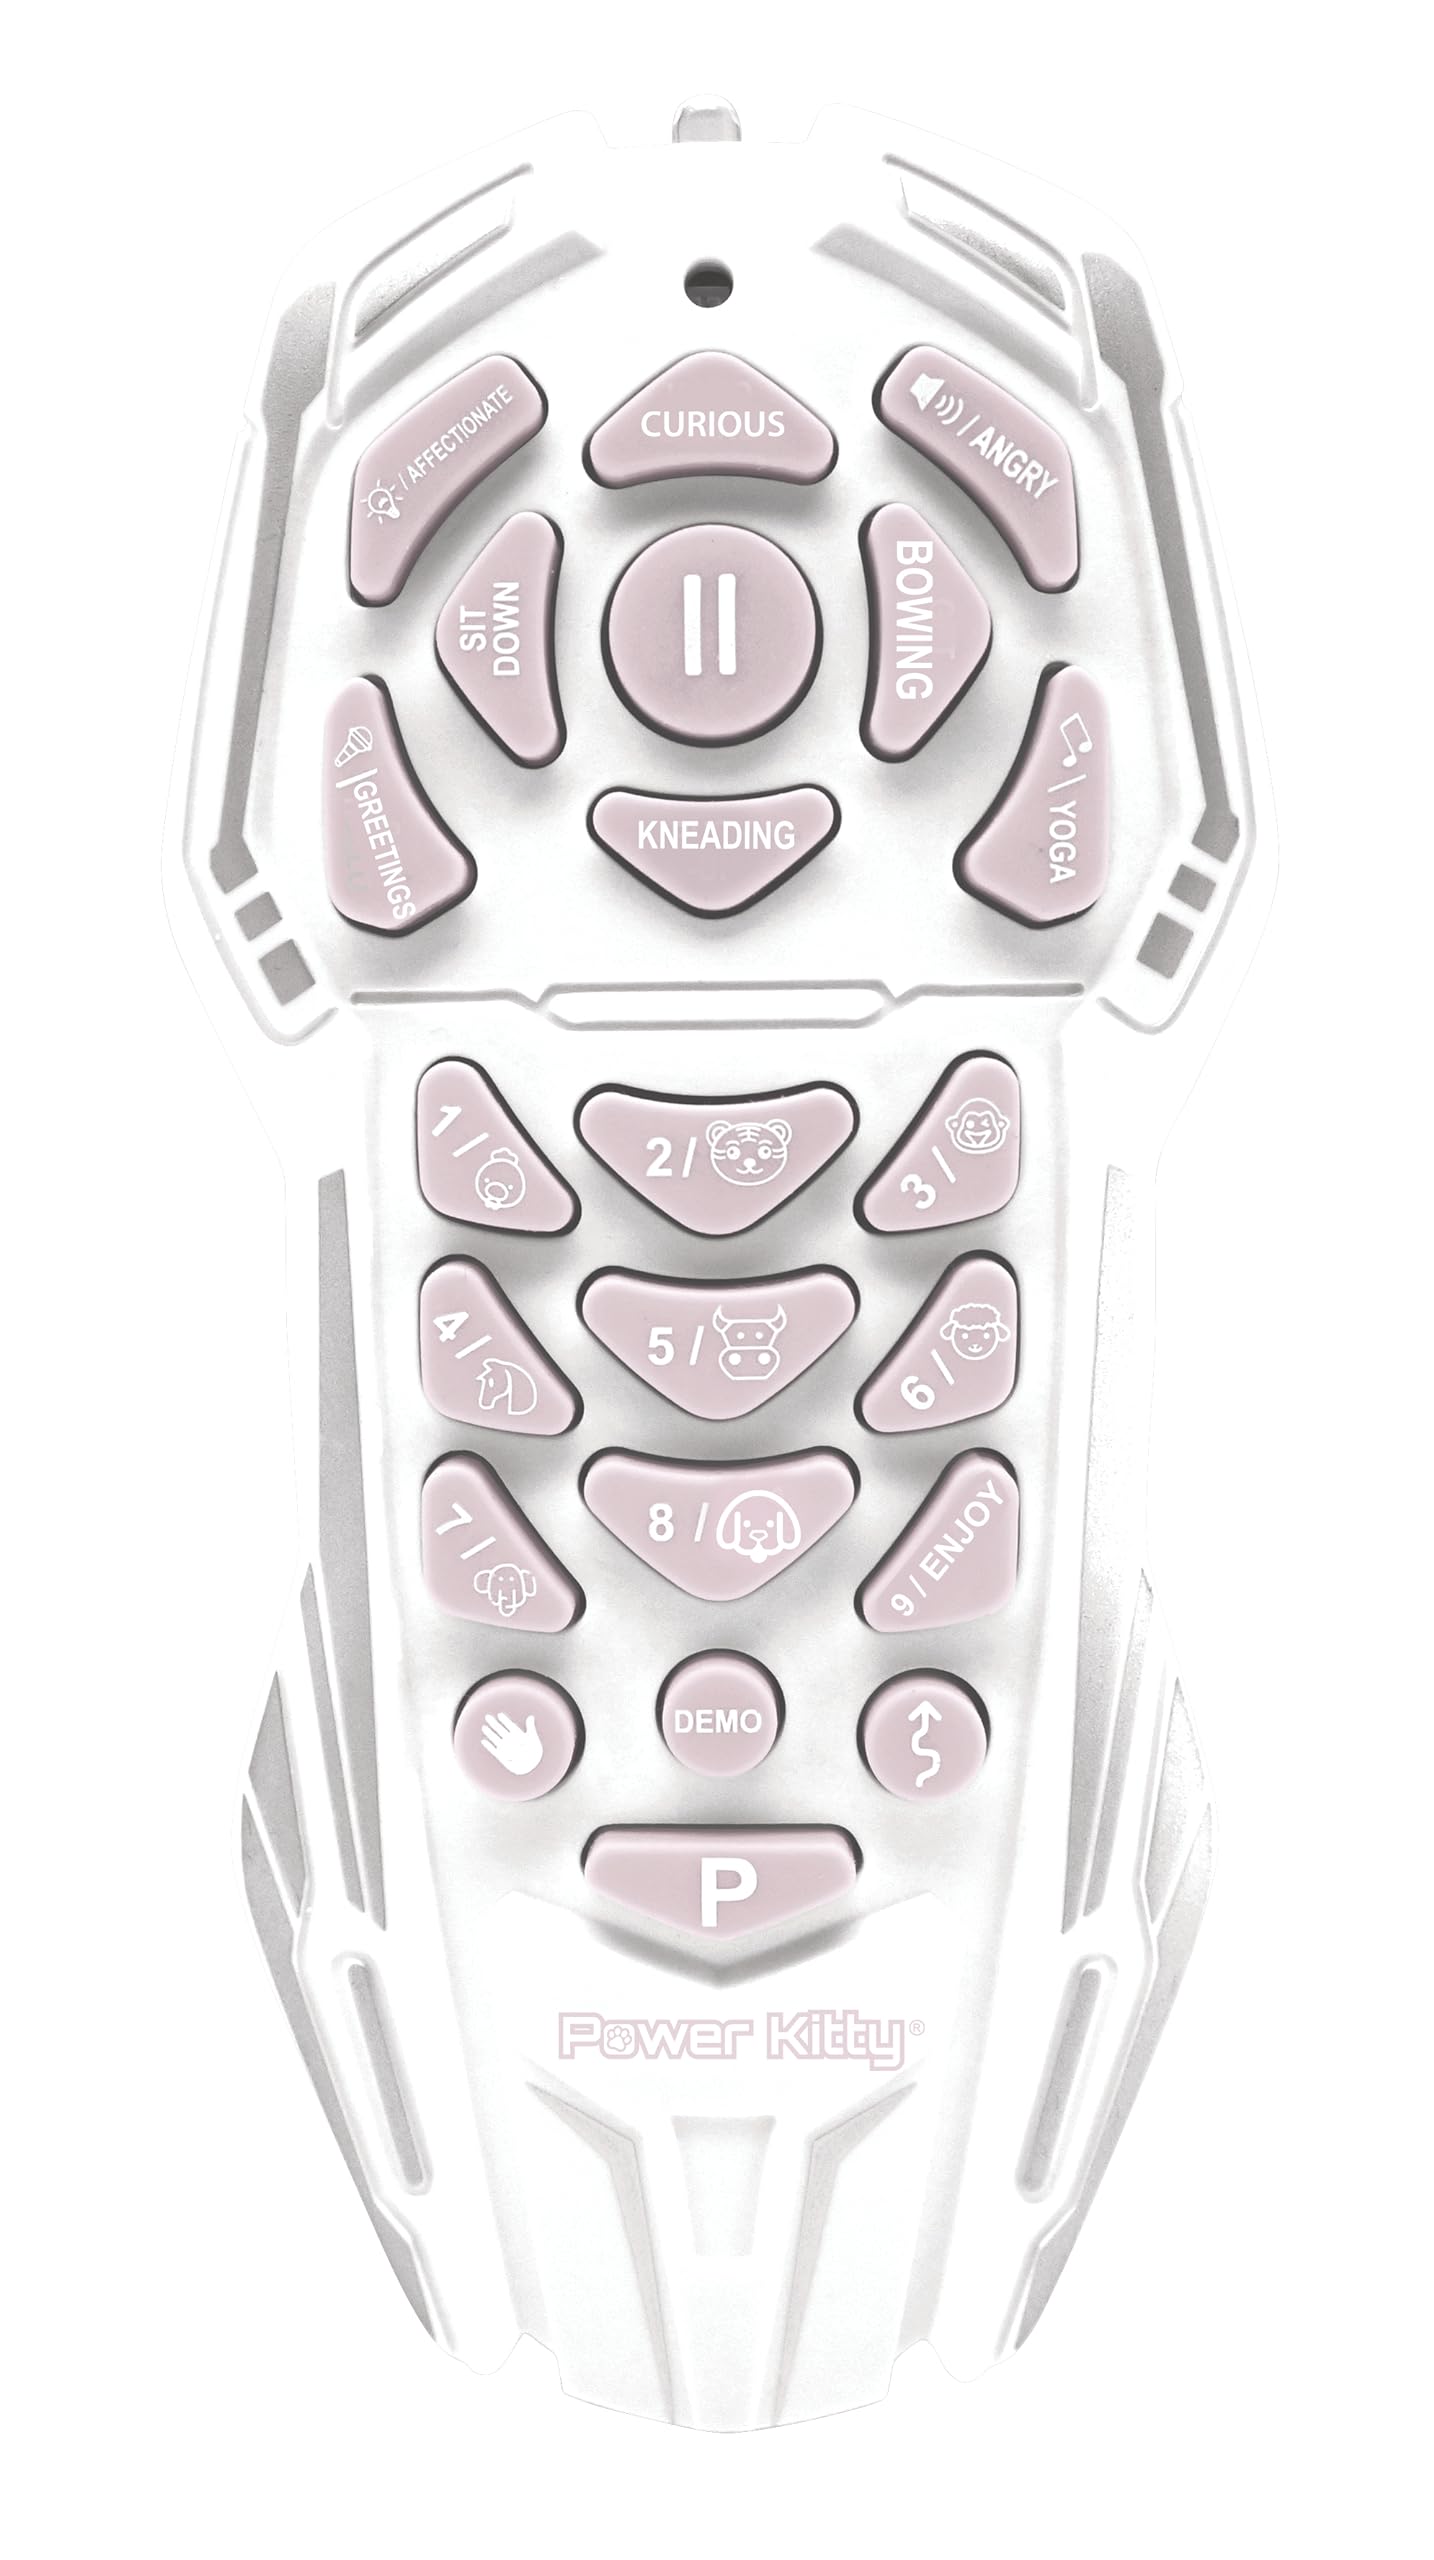 LEXiBOOK - Power Kitty® - Remote Control Robot Cat, Programmable Smart Robot, Light, Sound, White/Pink - KITTY01